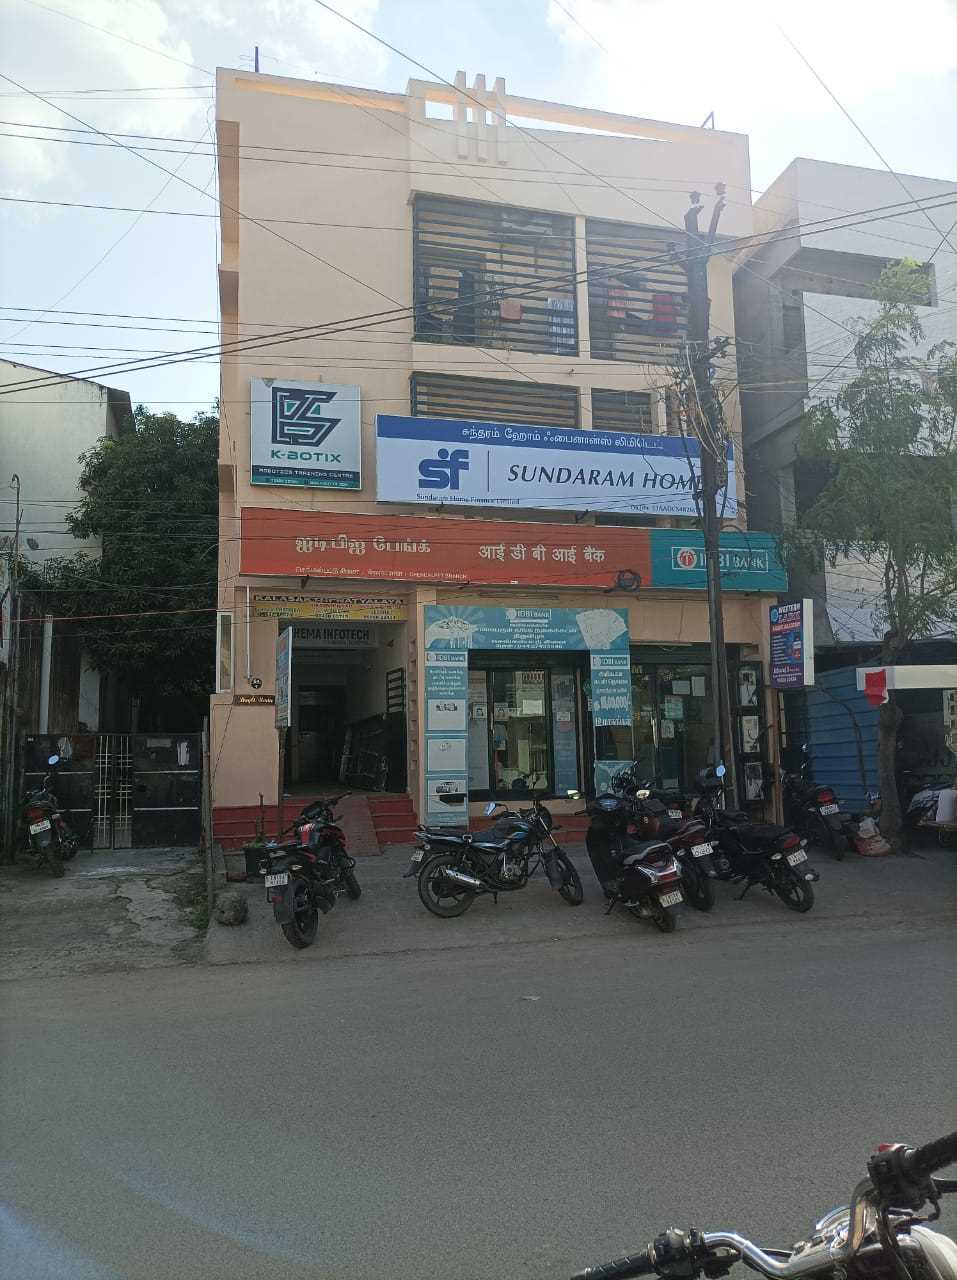 Sundaram Home Finance Limited: Best Home Loan in Gokulapuram, Chengalpattu